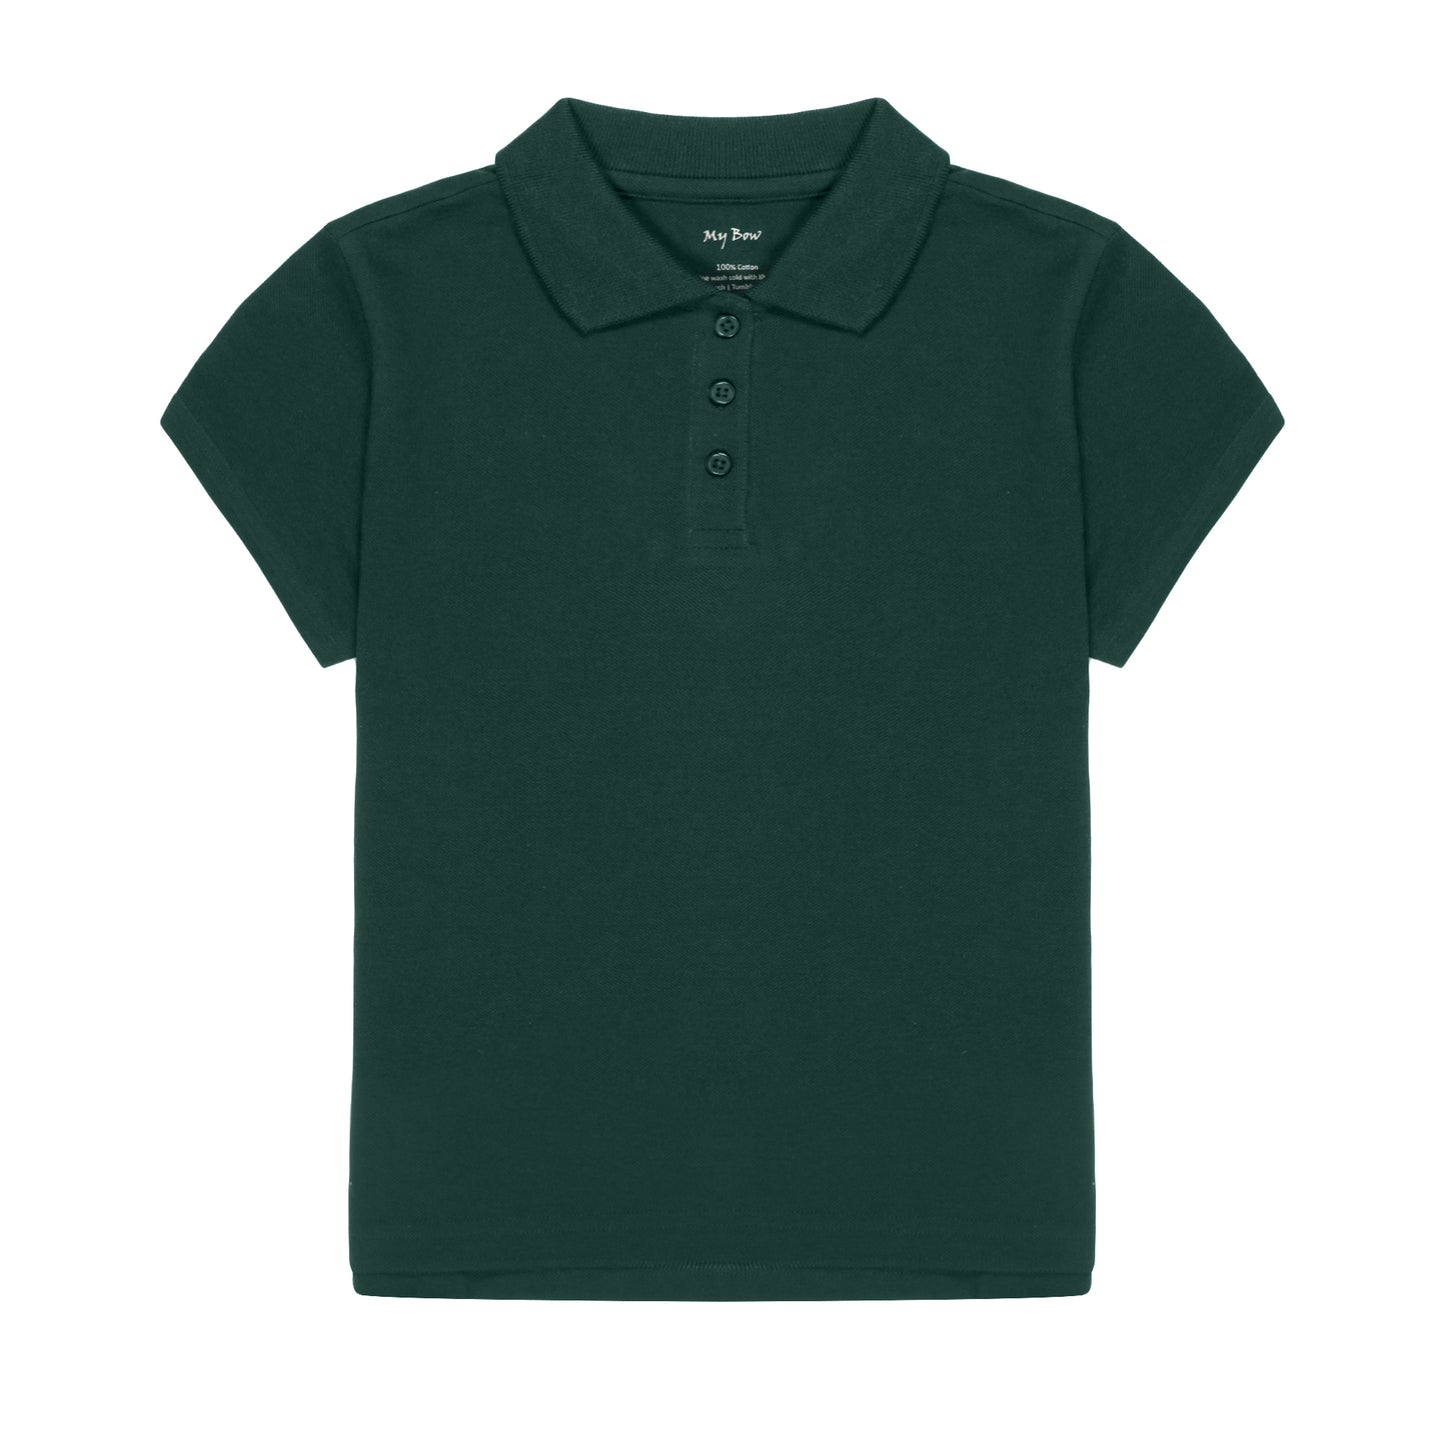 My Bow School Uniform Pique Girls Polo T-Shirt Short Sleeve 100% Cotton, Set of 3 - Green, Yellow ,Purple (US, Age 4 -14 Years))